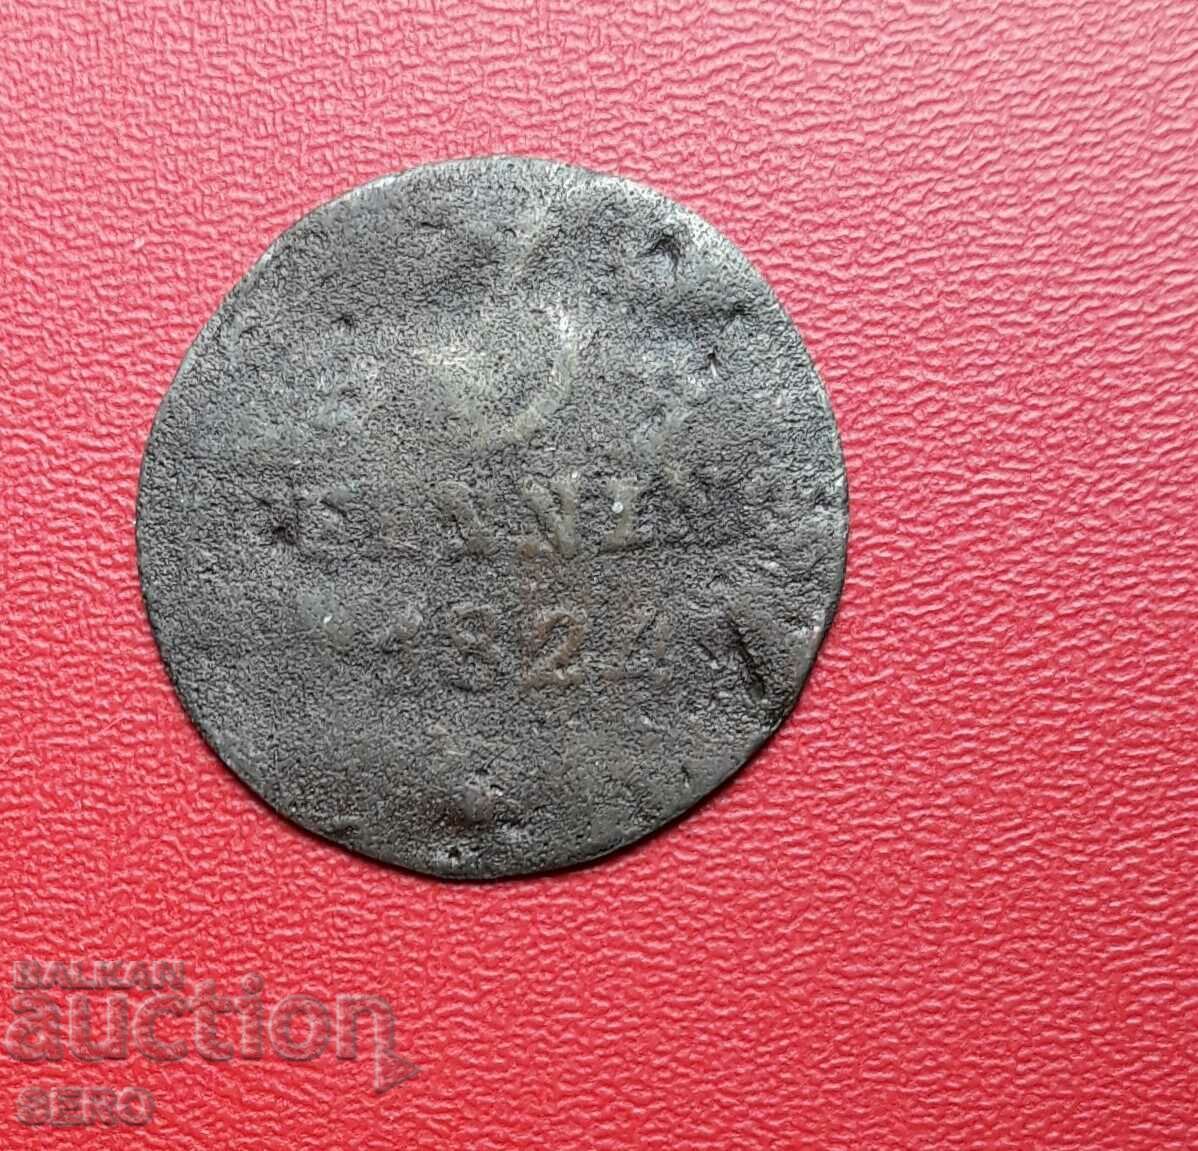 Germany-Rostock-3 pfennig 1824-rare